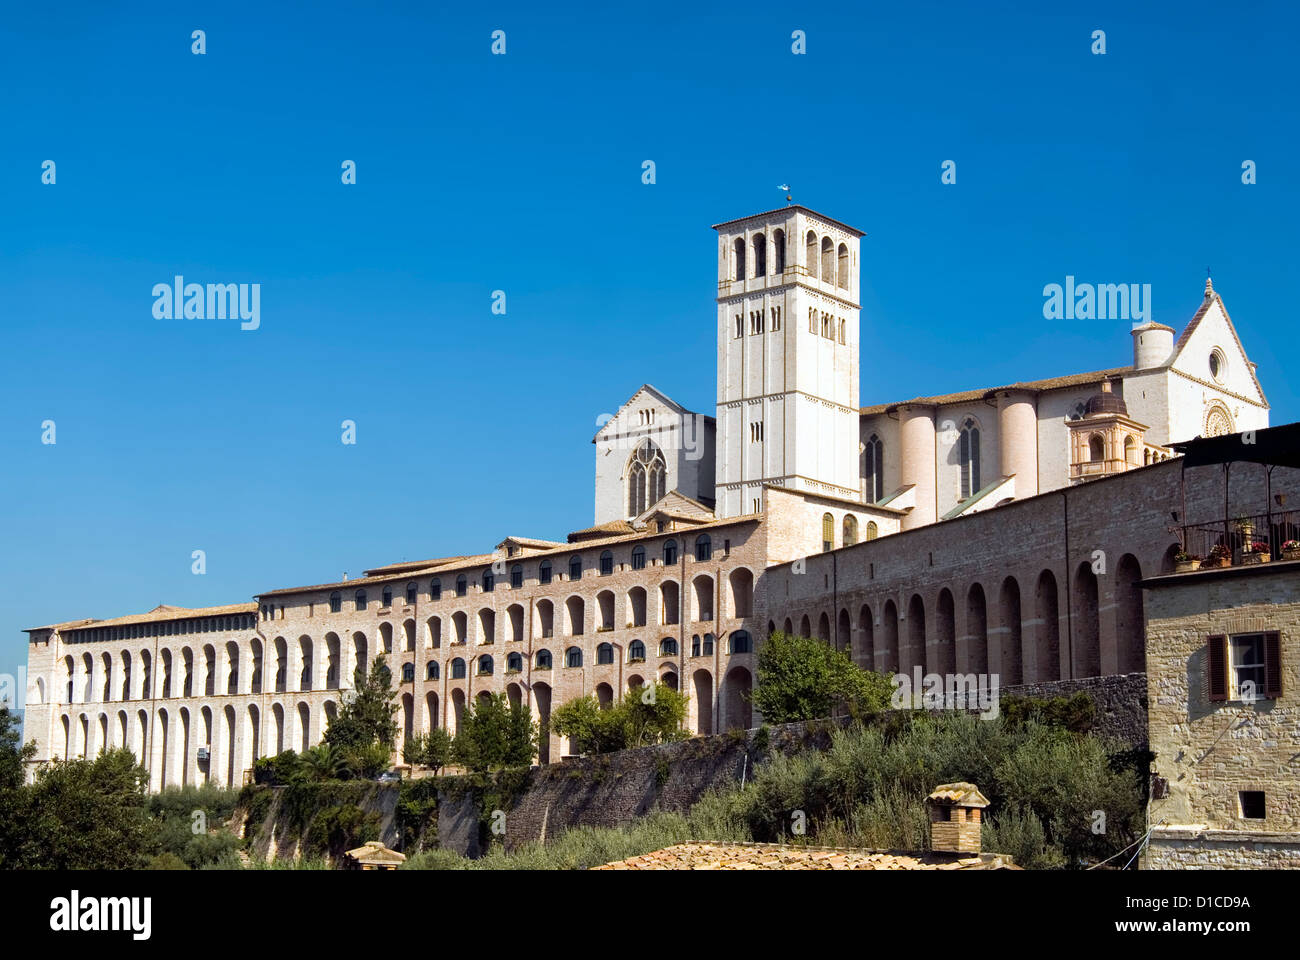 Basilica di San Francesco d'Assisi, Assisi, Umbria, Italy | Basilica di San Francesco d'Assisi, Assisi, Umbrien, Italien Stock Photo